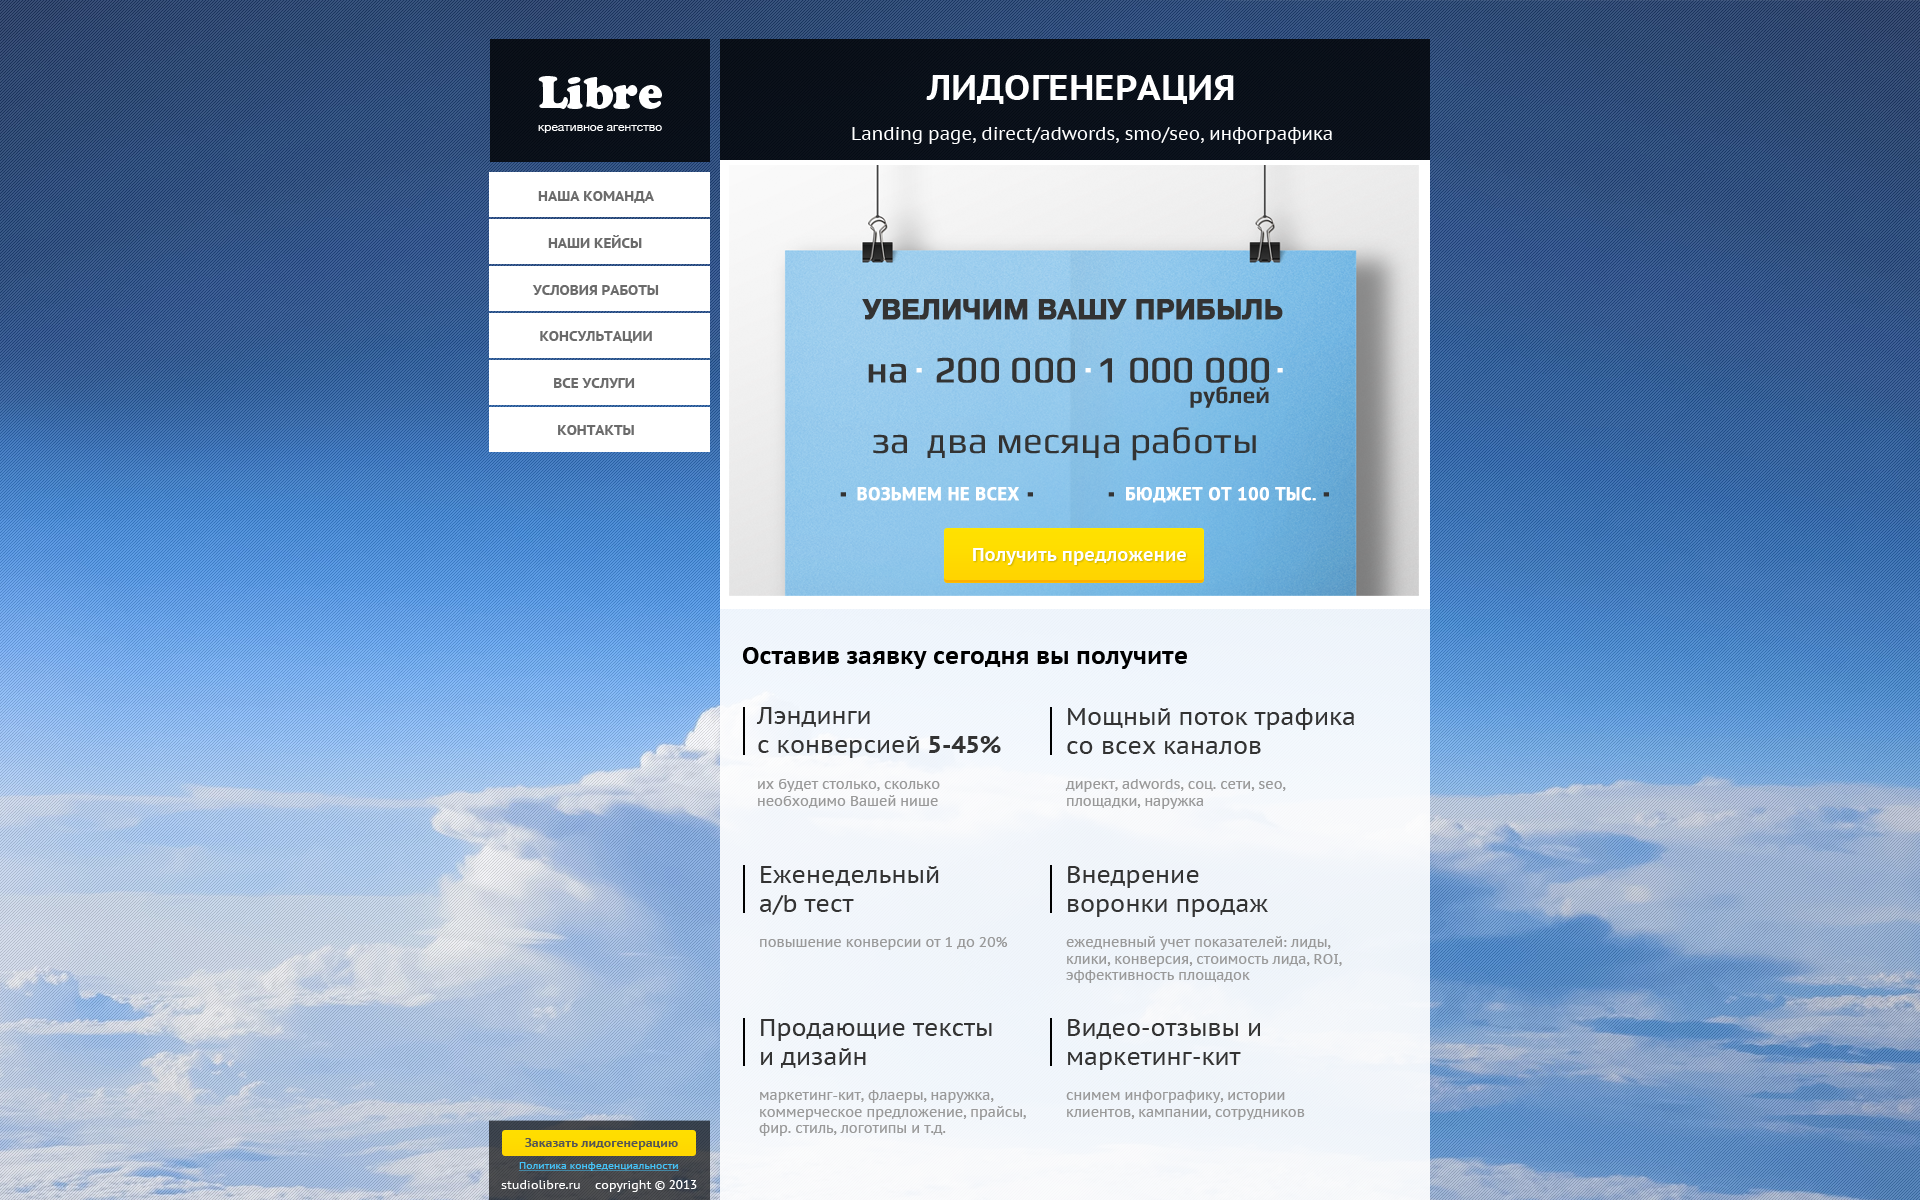 Libre (landing page)